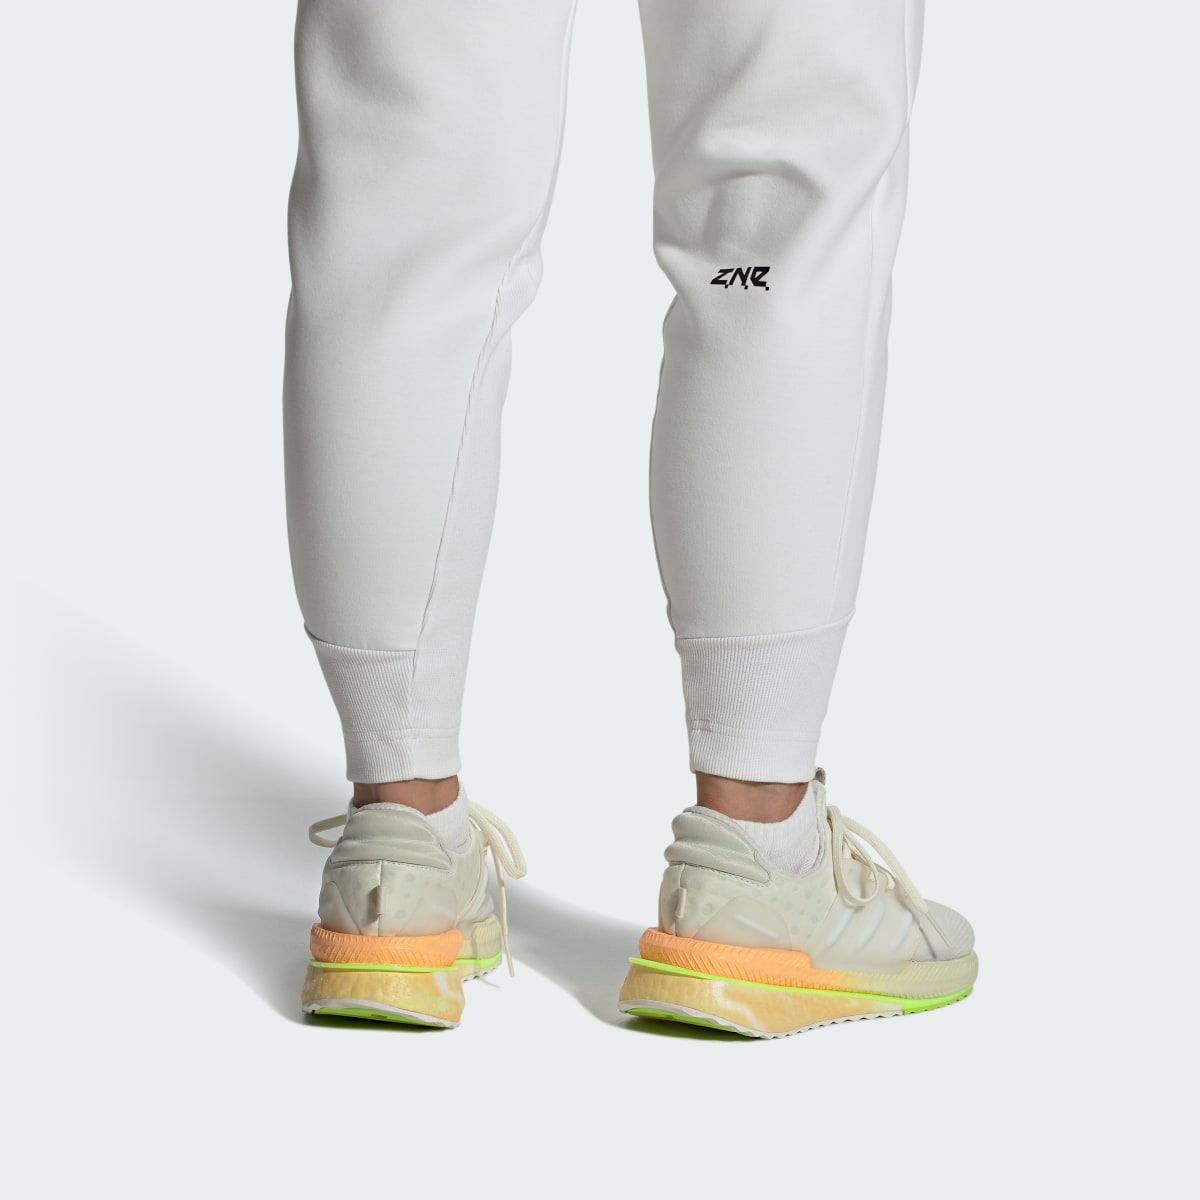 Adidas X_PLRBOOST Ayakkabı. 5